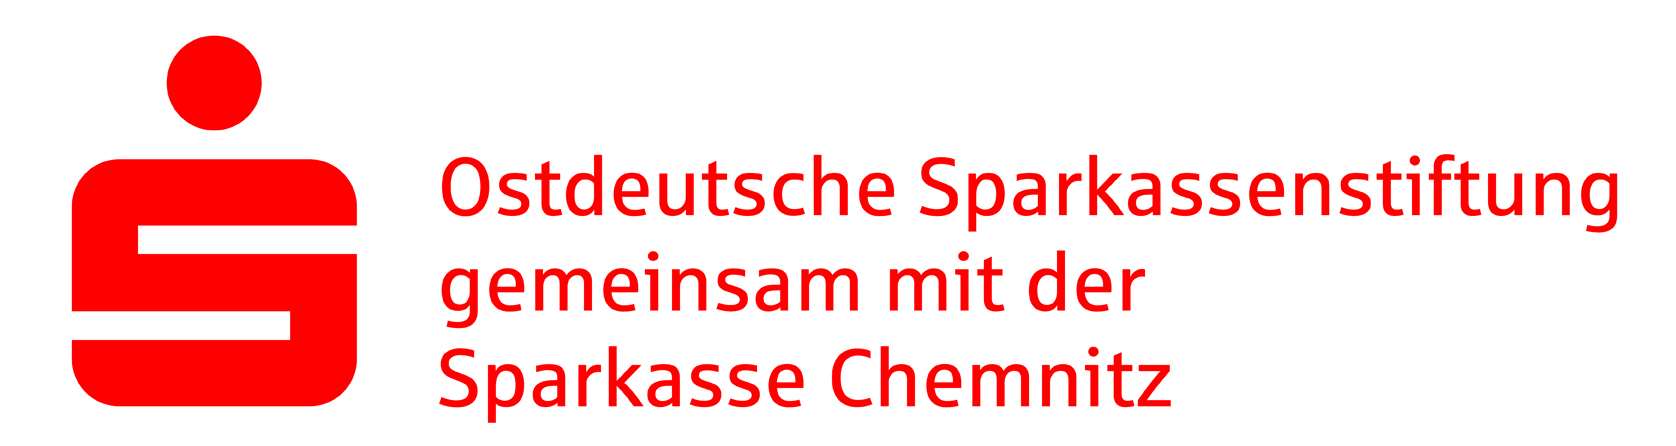 Ostdeutsche_Sparkassenstiftung_frei_web.jpg